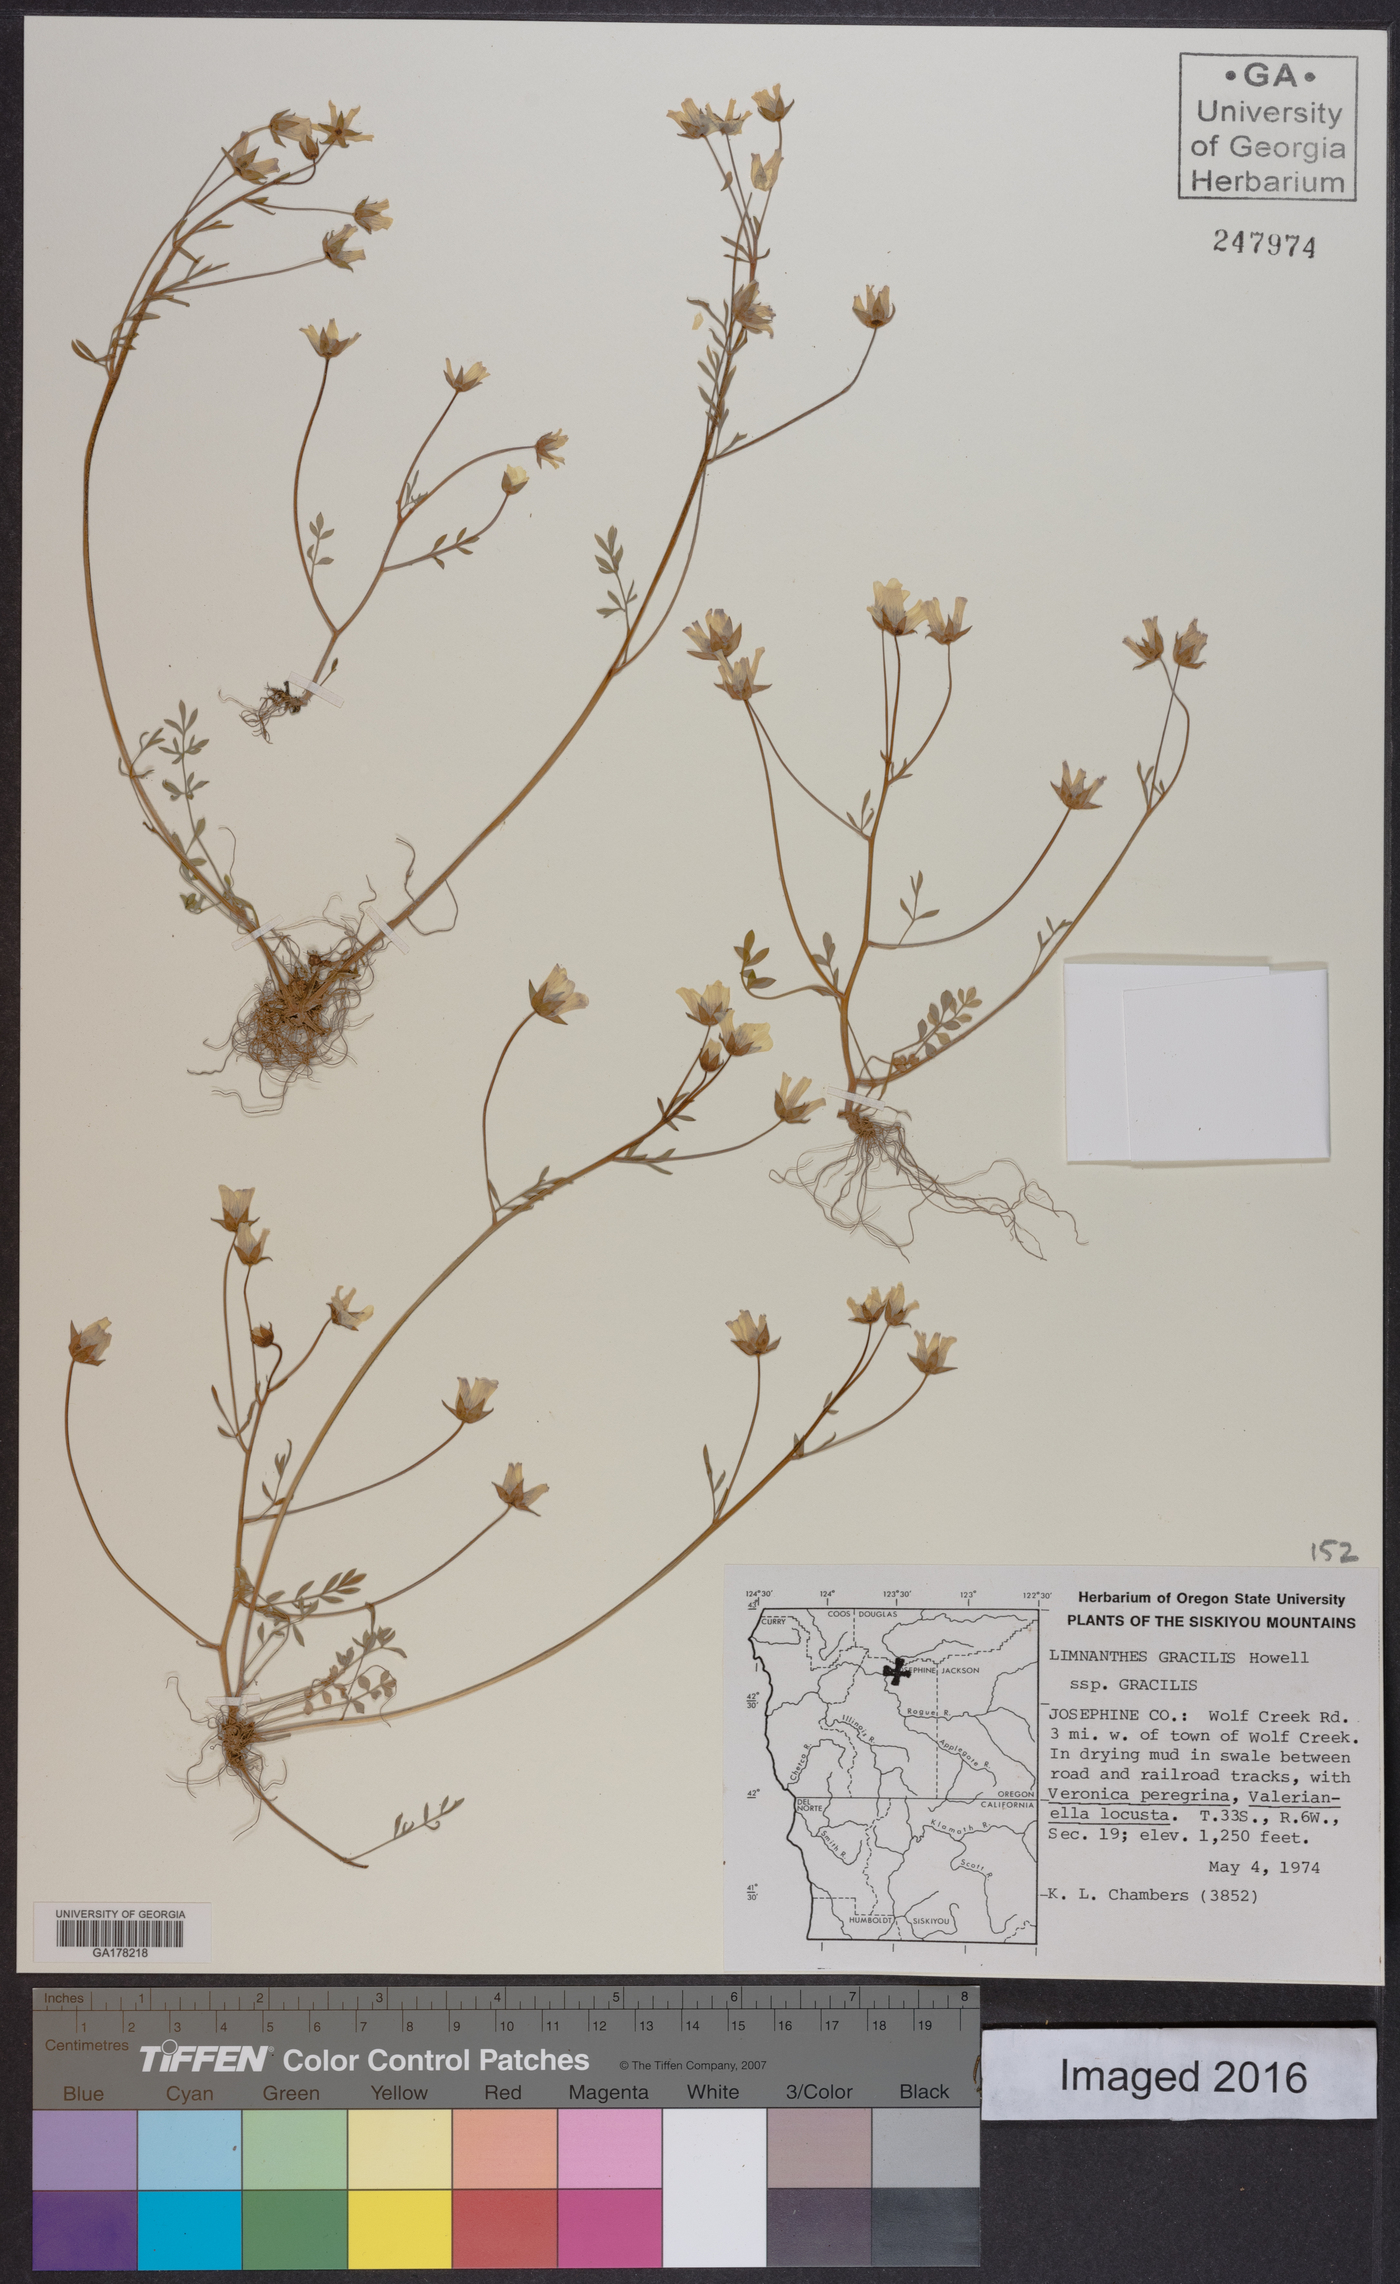 Limnanthes gracilis subsp. gracilis image